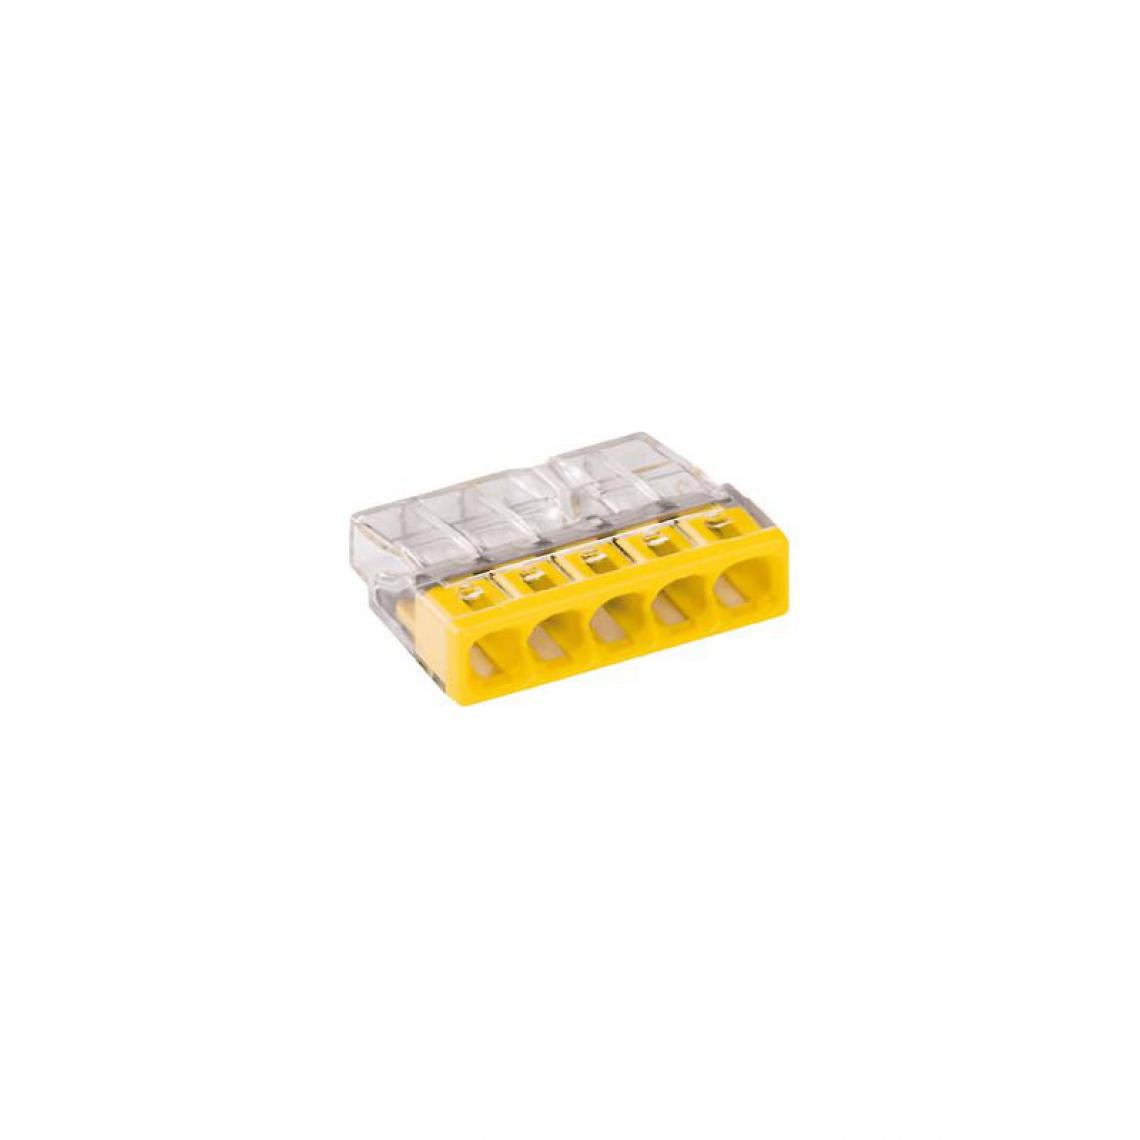 marque generique - Bornes de raccordement VDE Wago-COM.5x0,5-2,5qmm jaune 6St - Boîtes d'encastrement